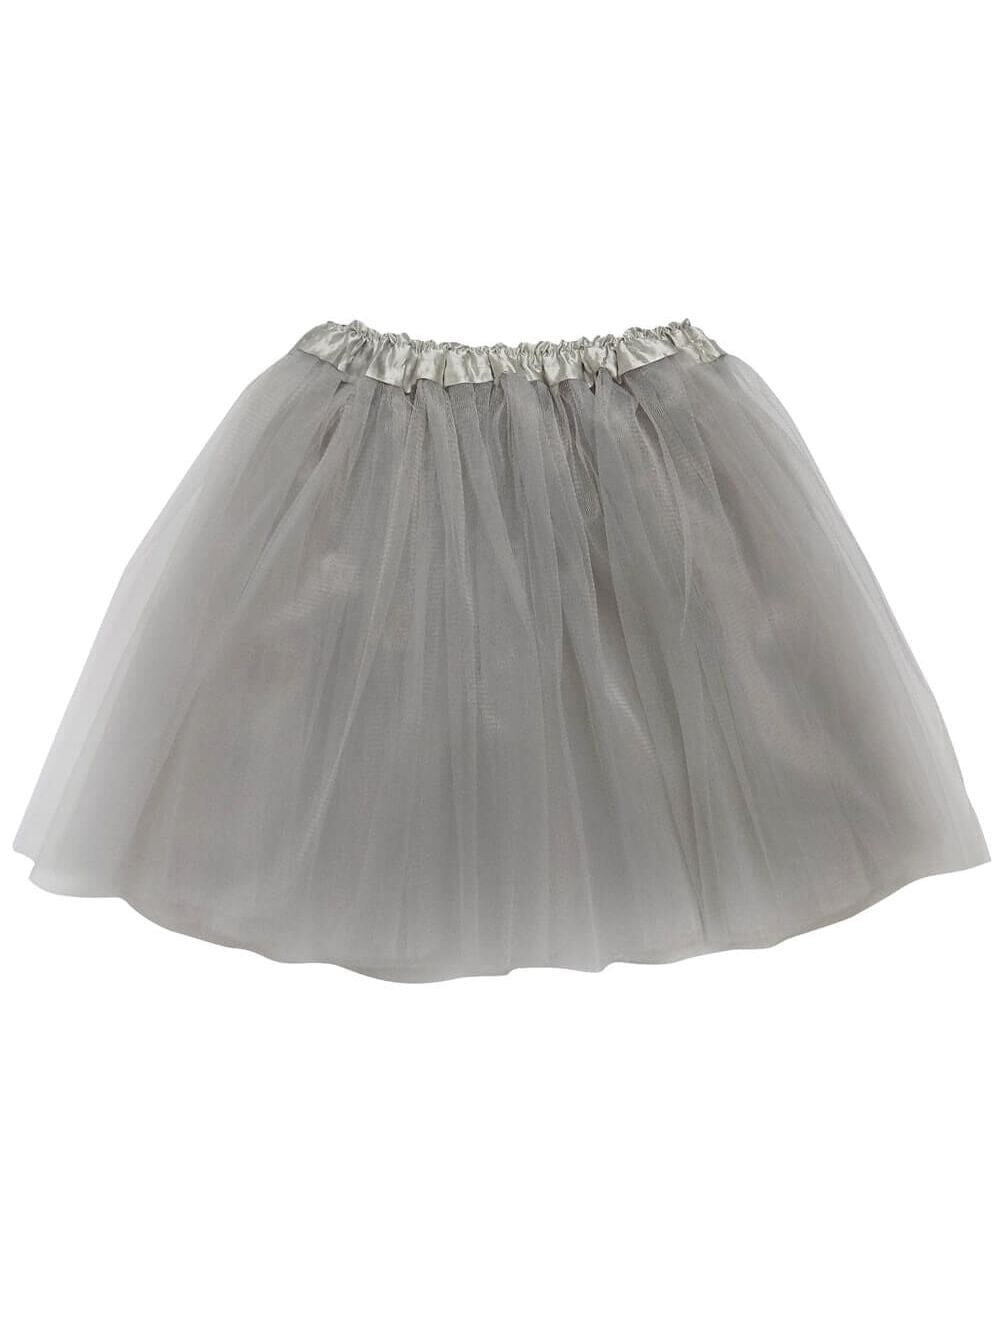 Silver Plus Size Adult Tutu Skirt - Women's Plus Size 3- Layer Basic Ballet Costume Dance Tutus - Sydney So Sweet